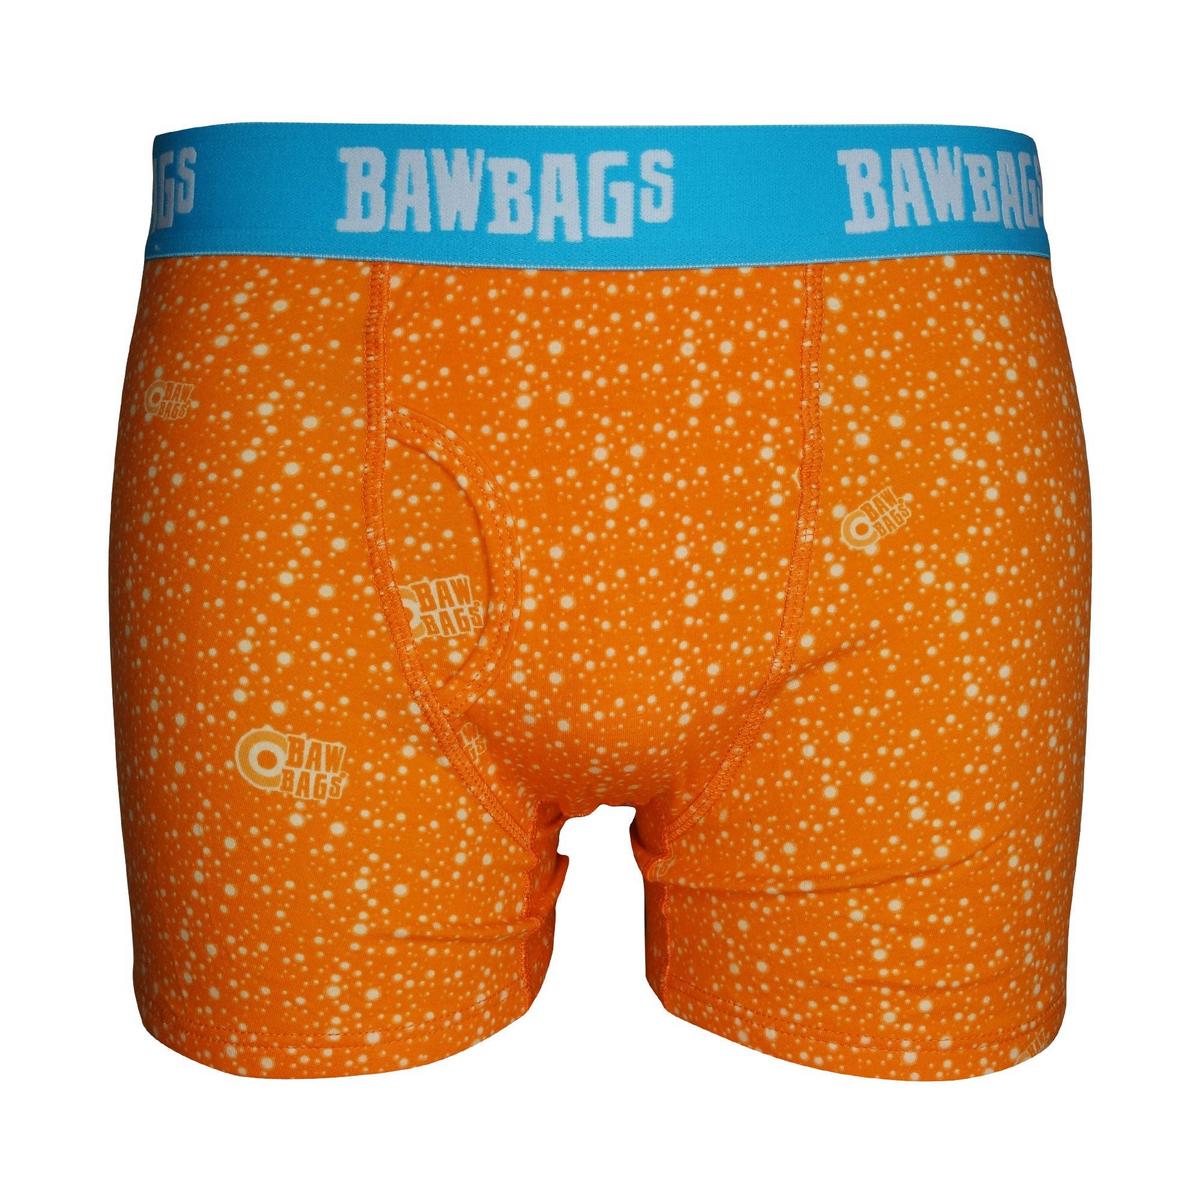 Bawbags Men's Original Bubbles - Orange